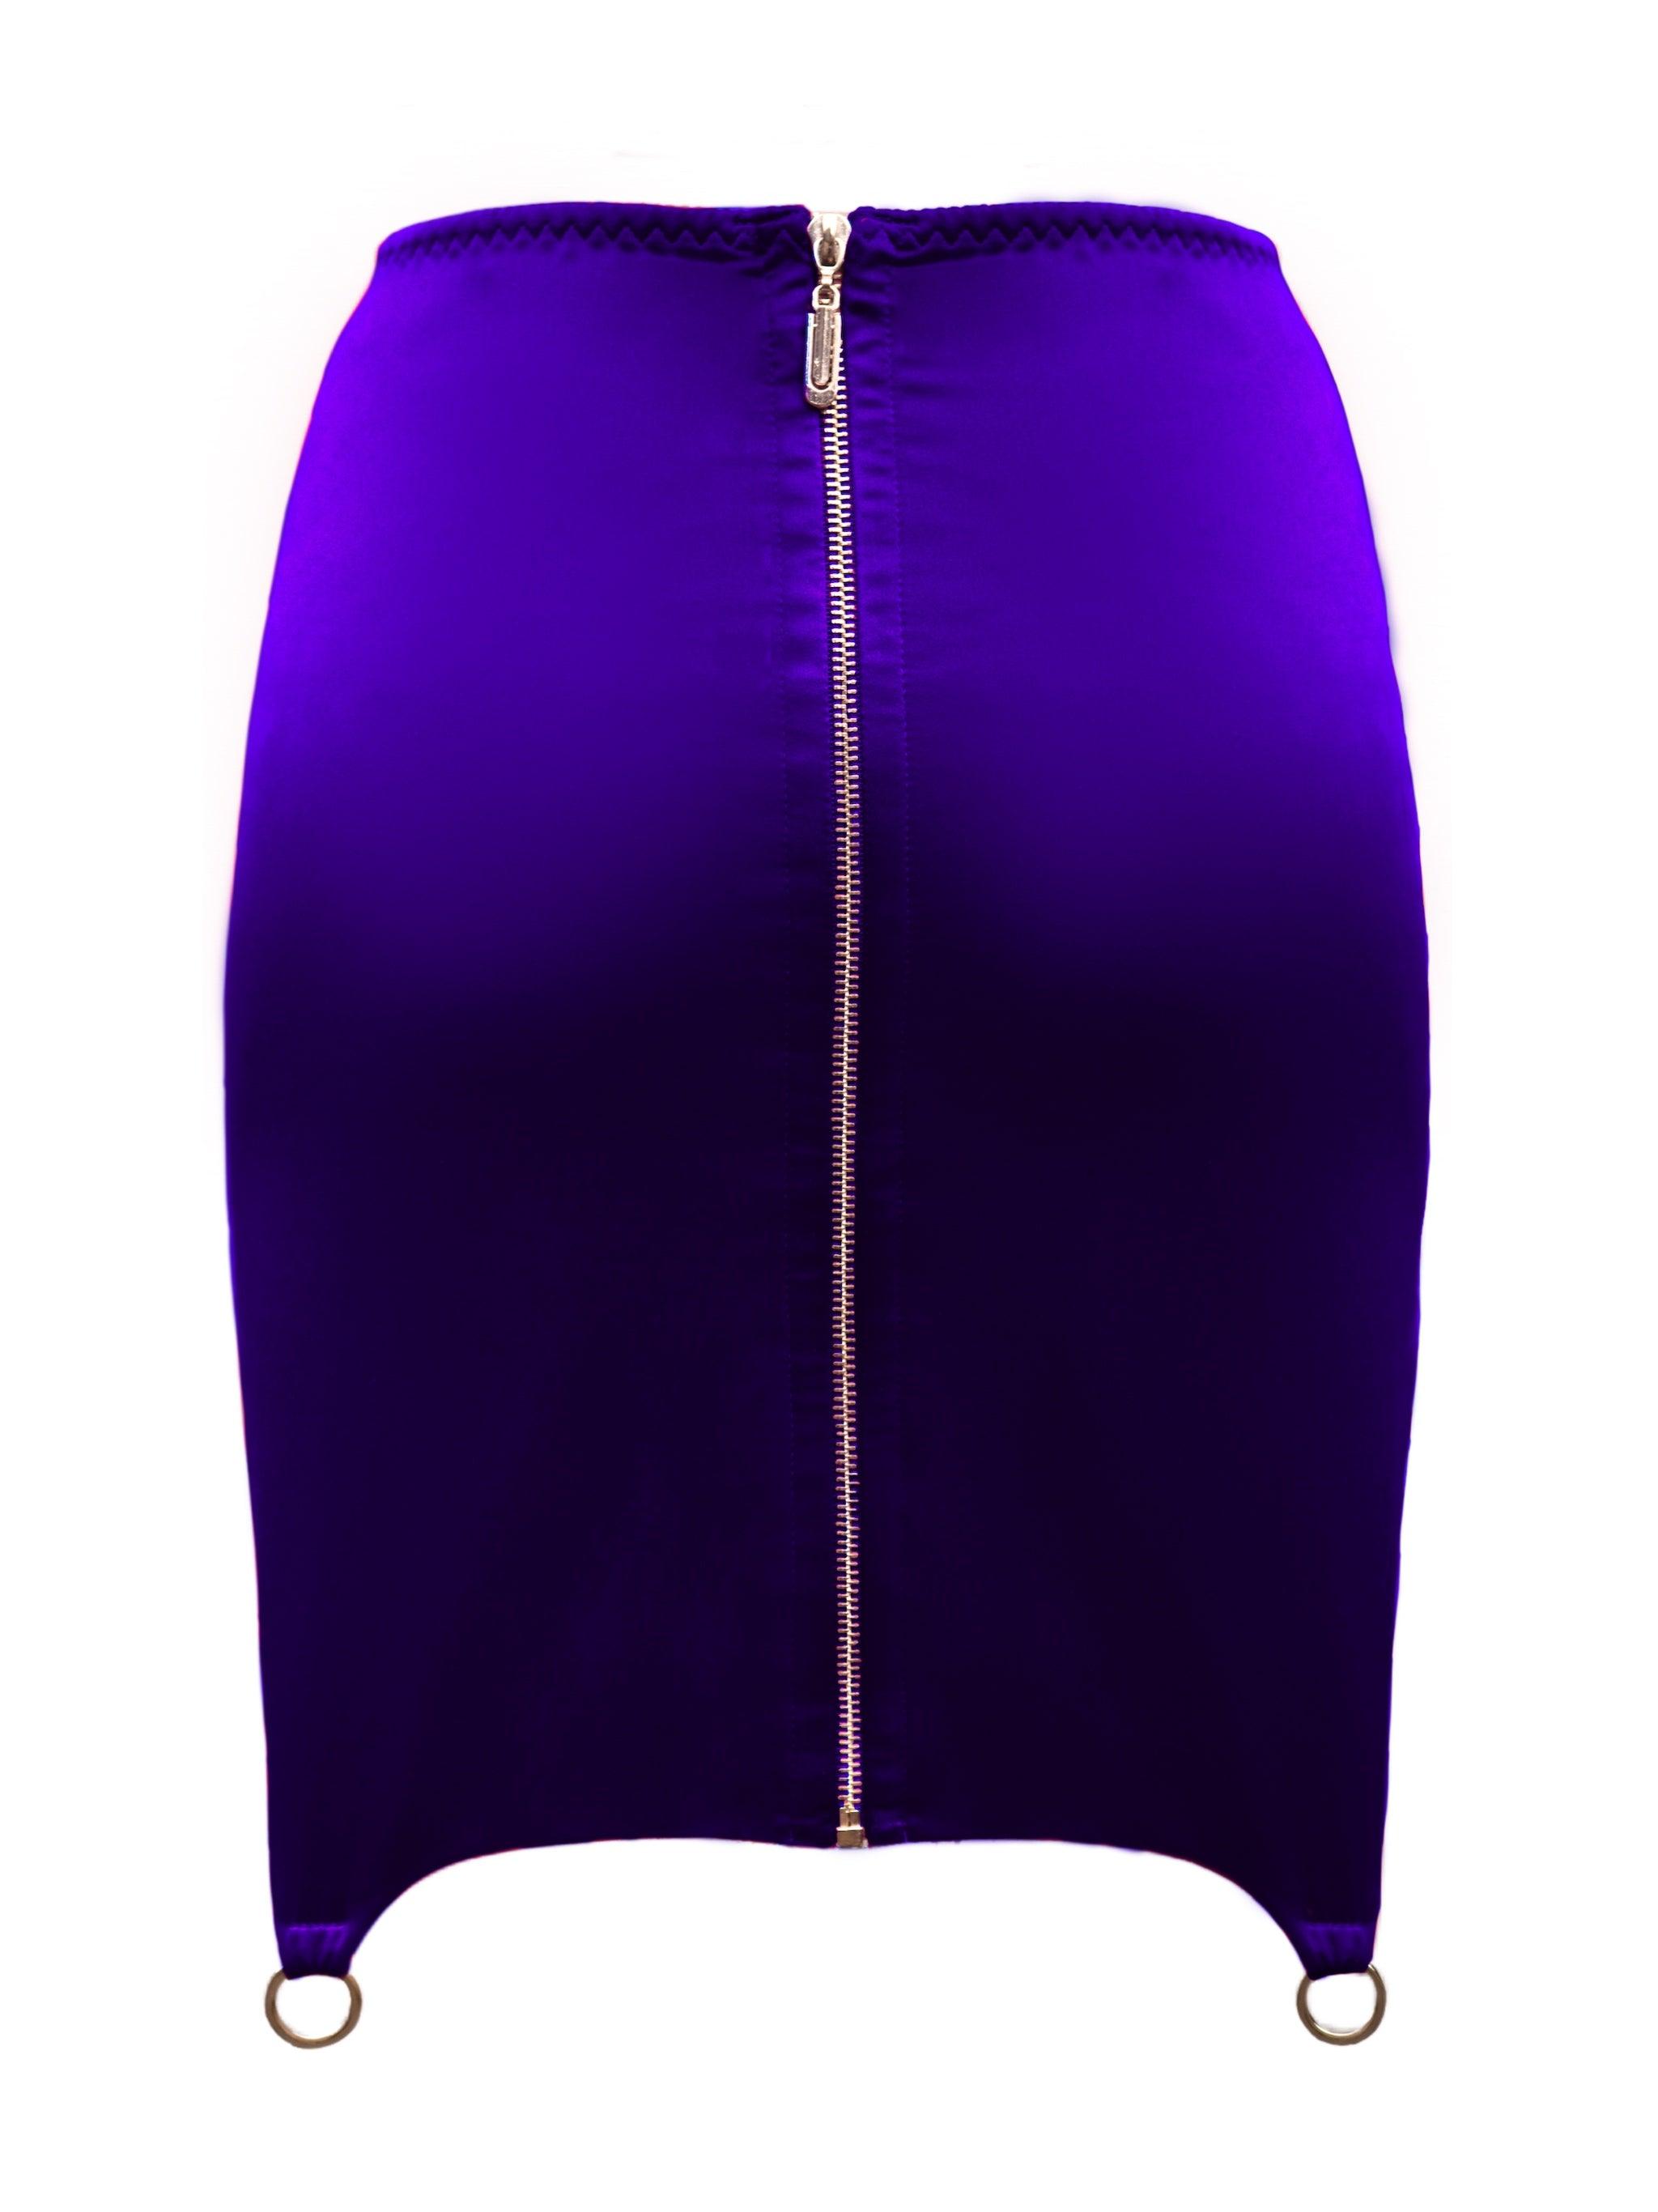 Cymothoe Violet skirt - yesUndress